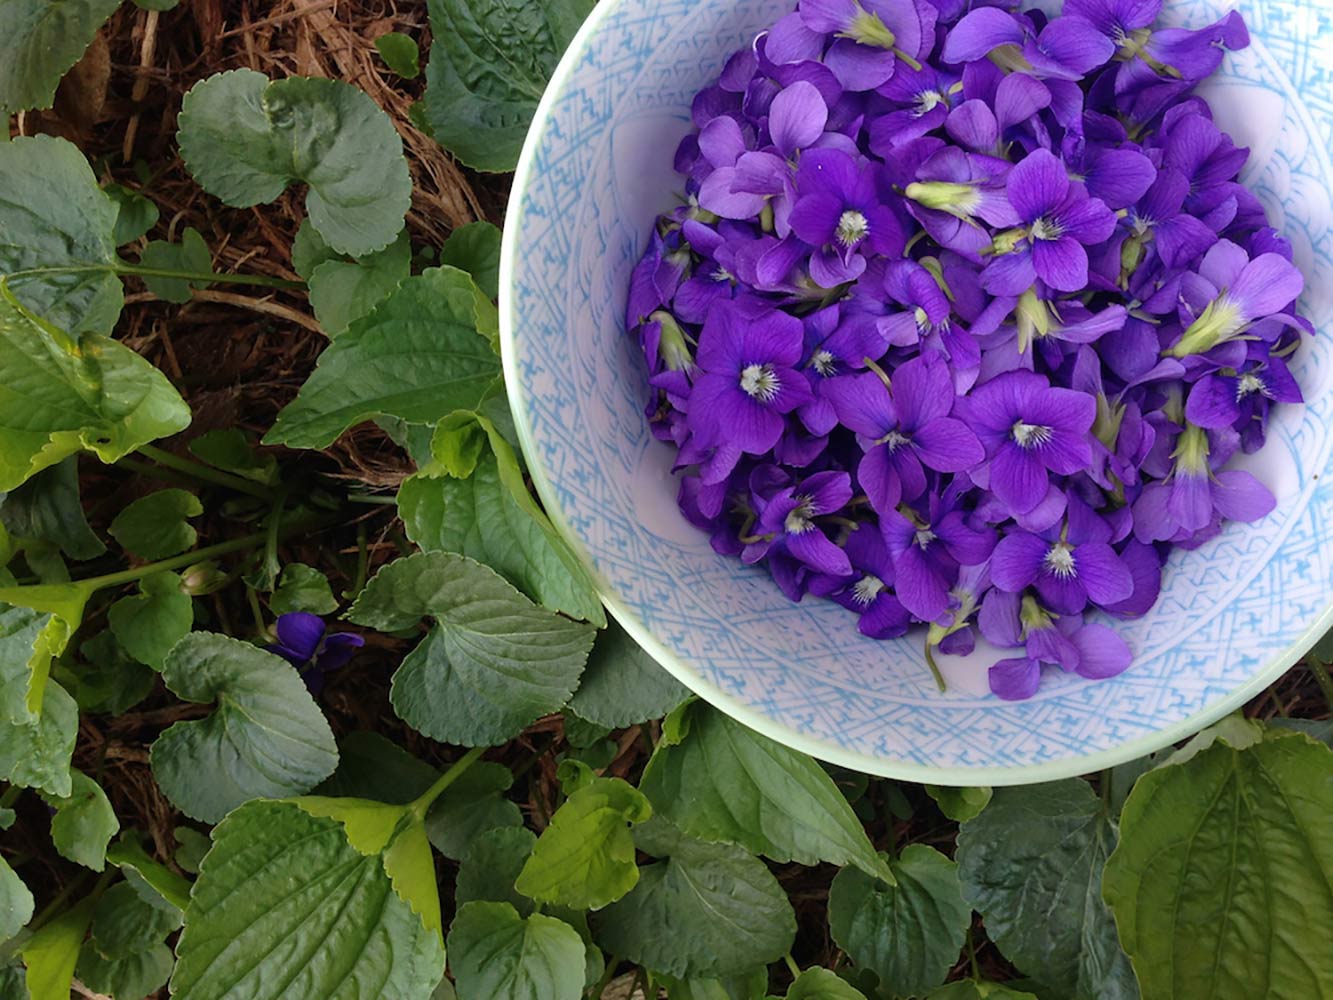 A bowl of harvested wild violets sits next to violet leaves.